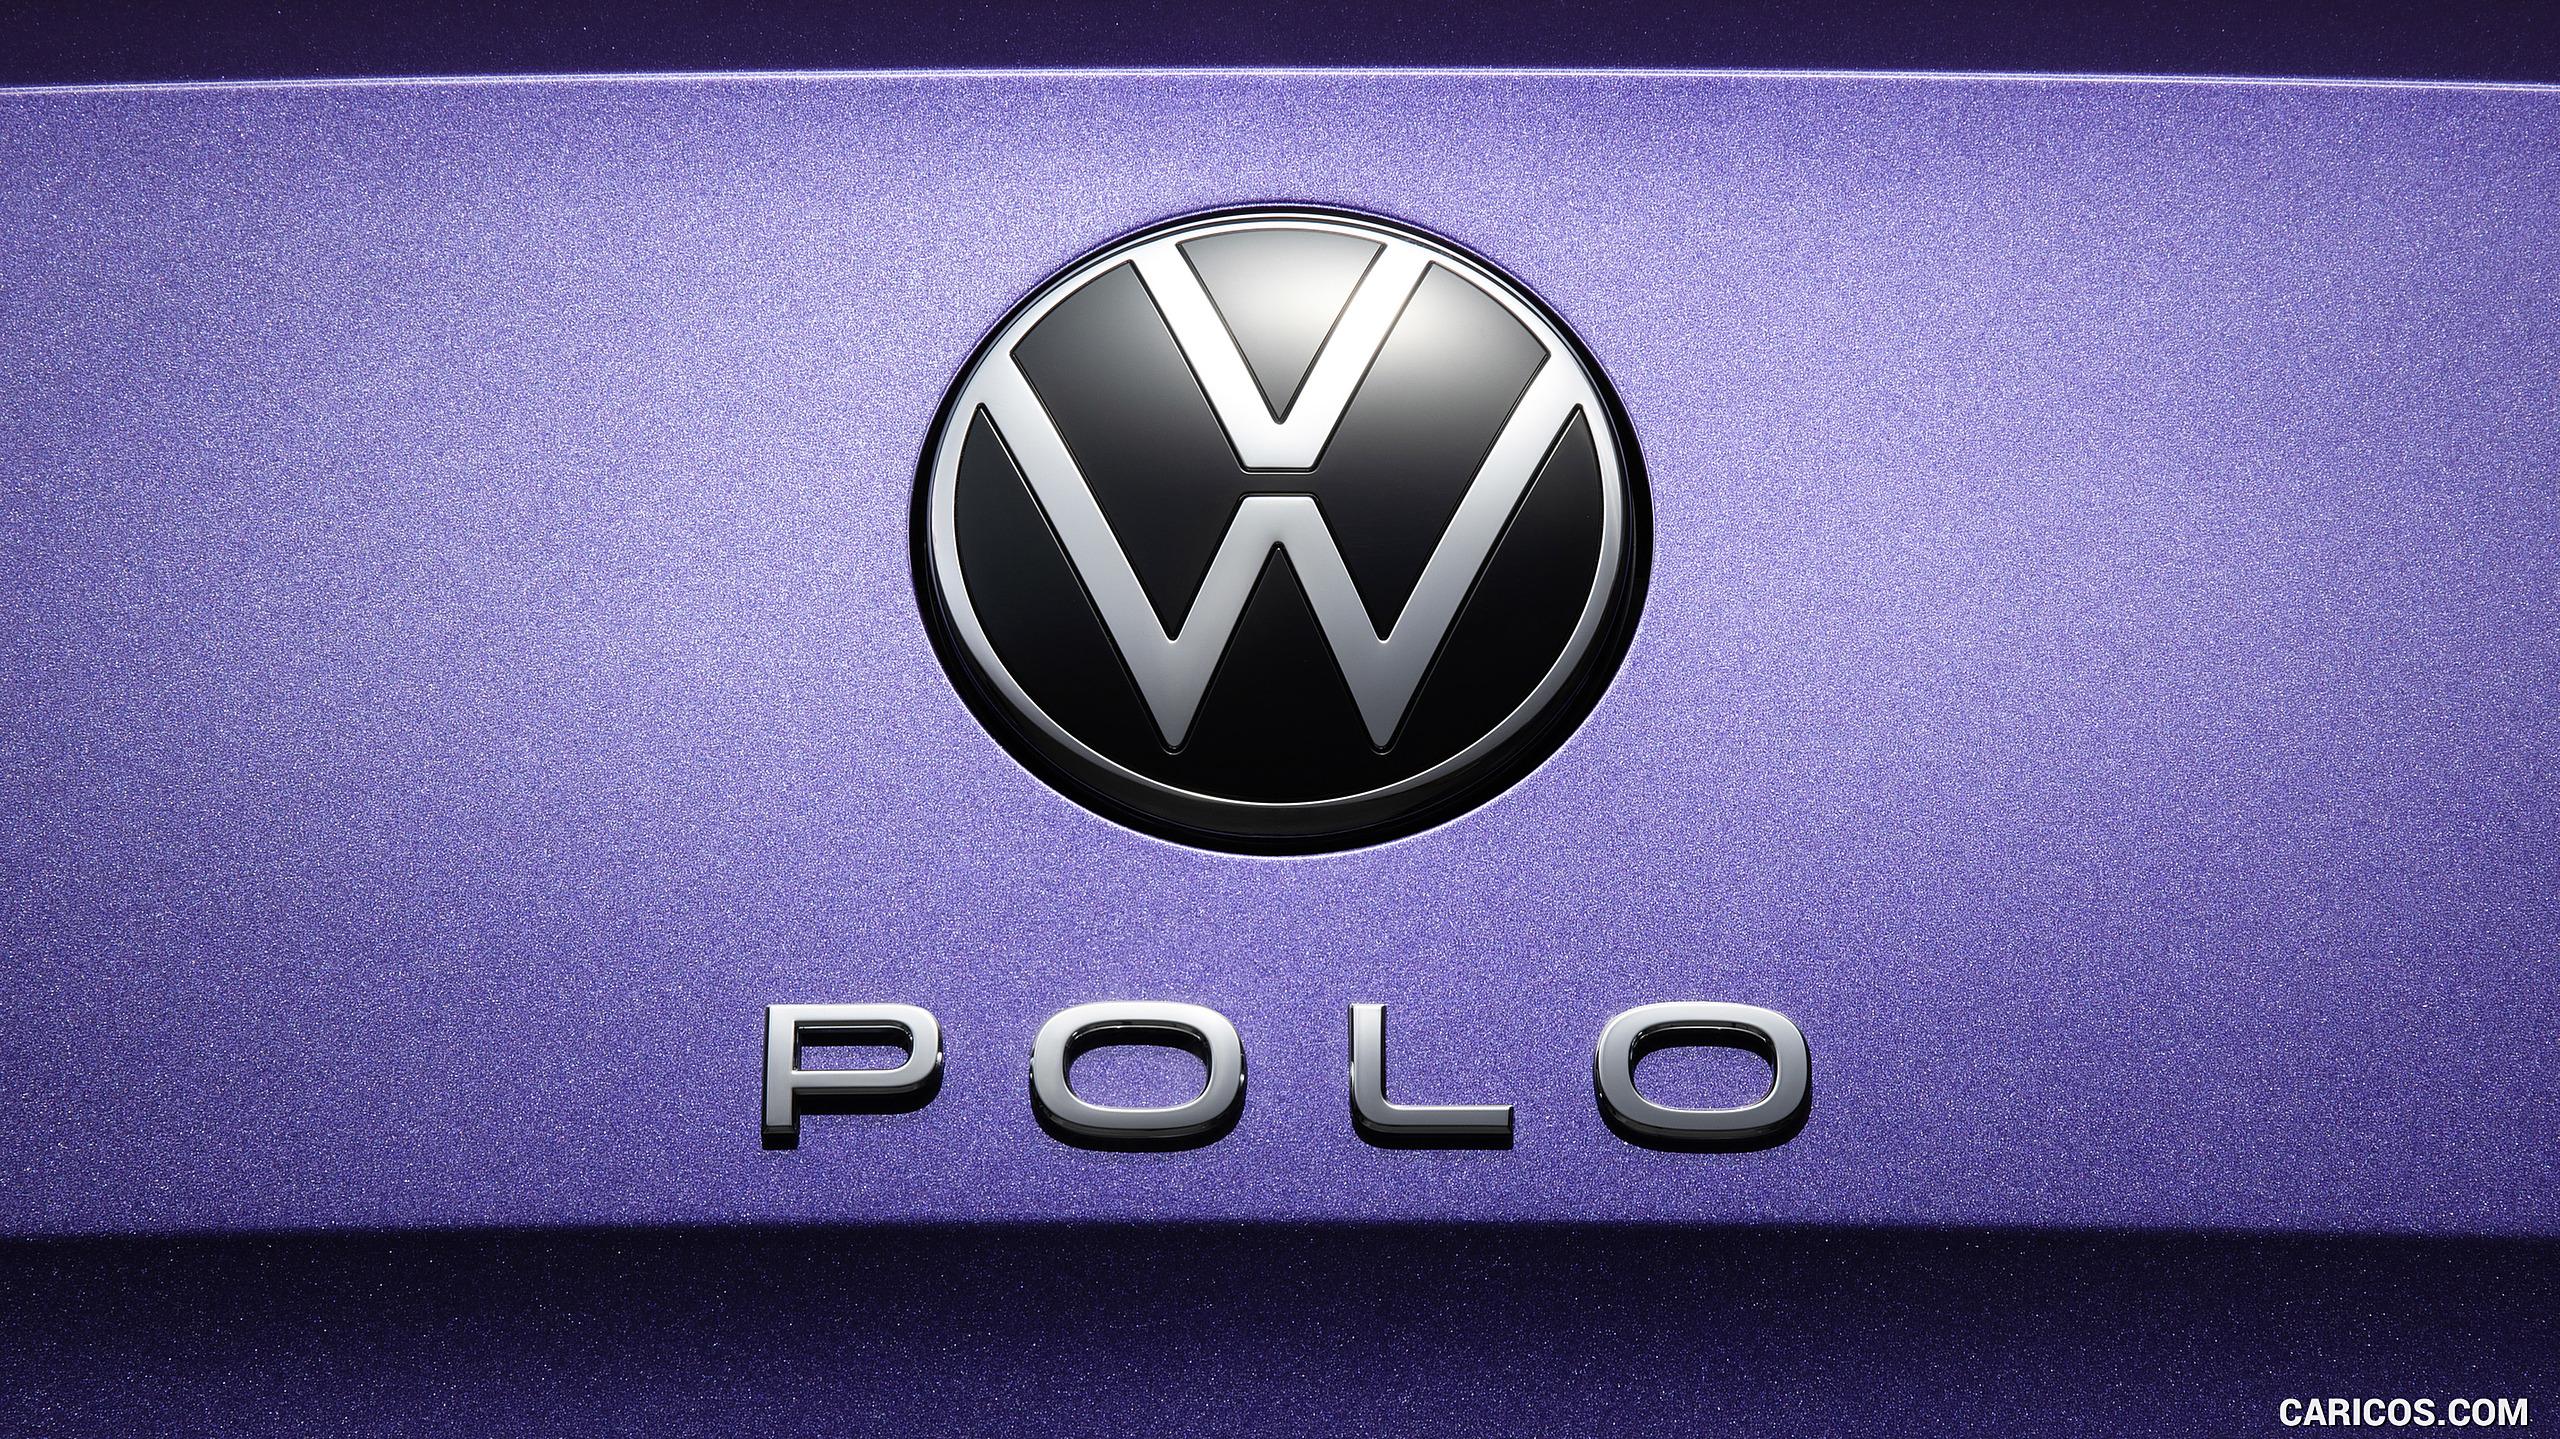 Volkswagen Polo Badge Caricos